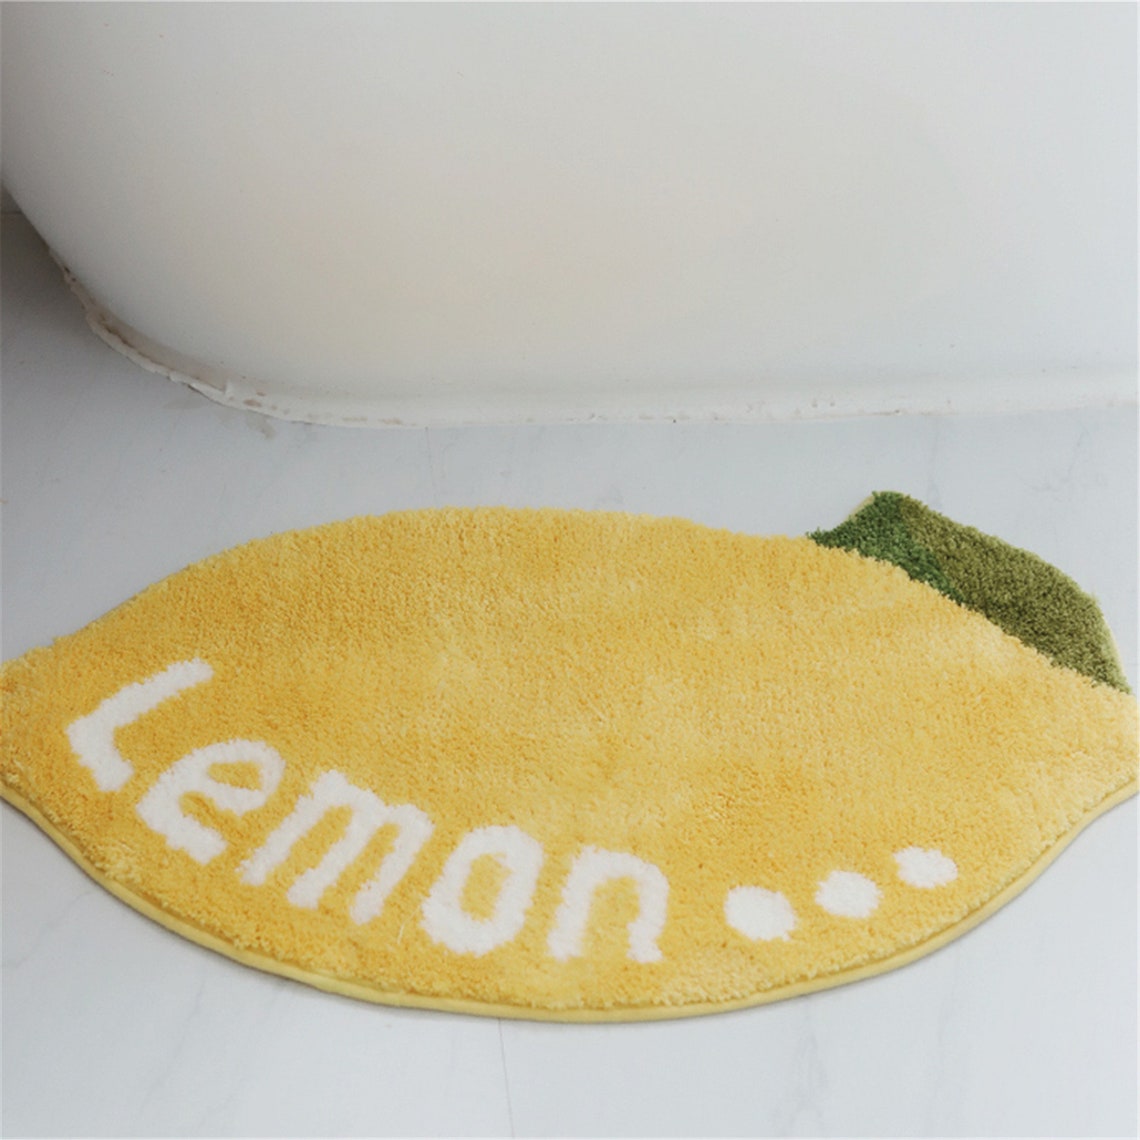 Fruit Bathmat Soft Fluffy Avocado Lemon Bathroom Tub Side Foot | Etsy